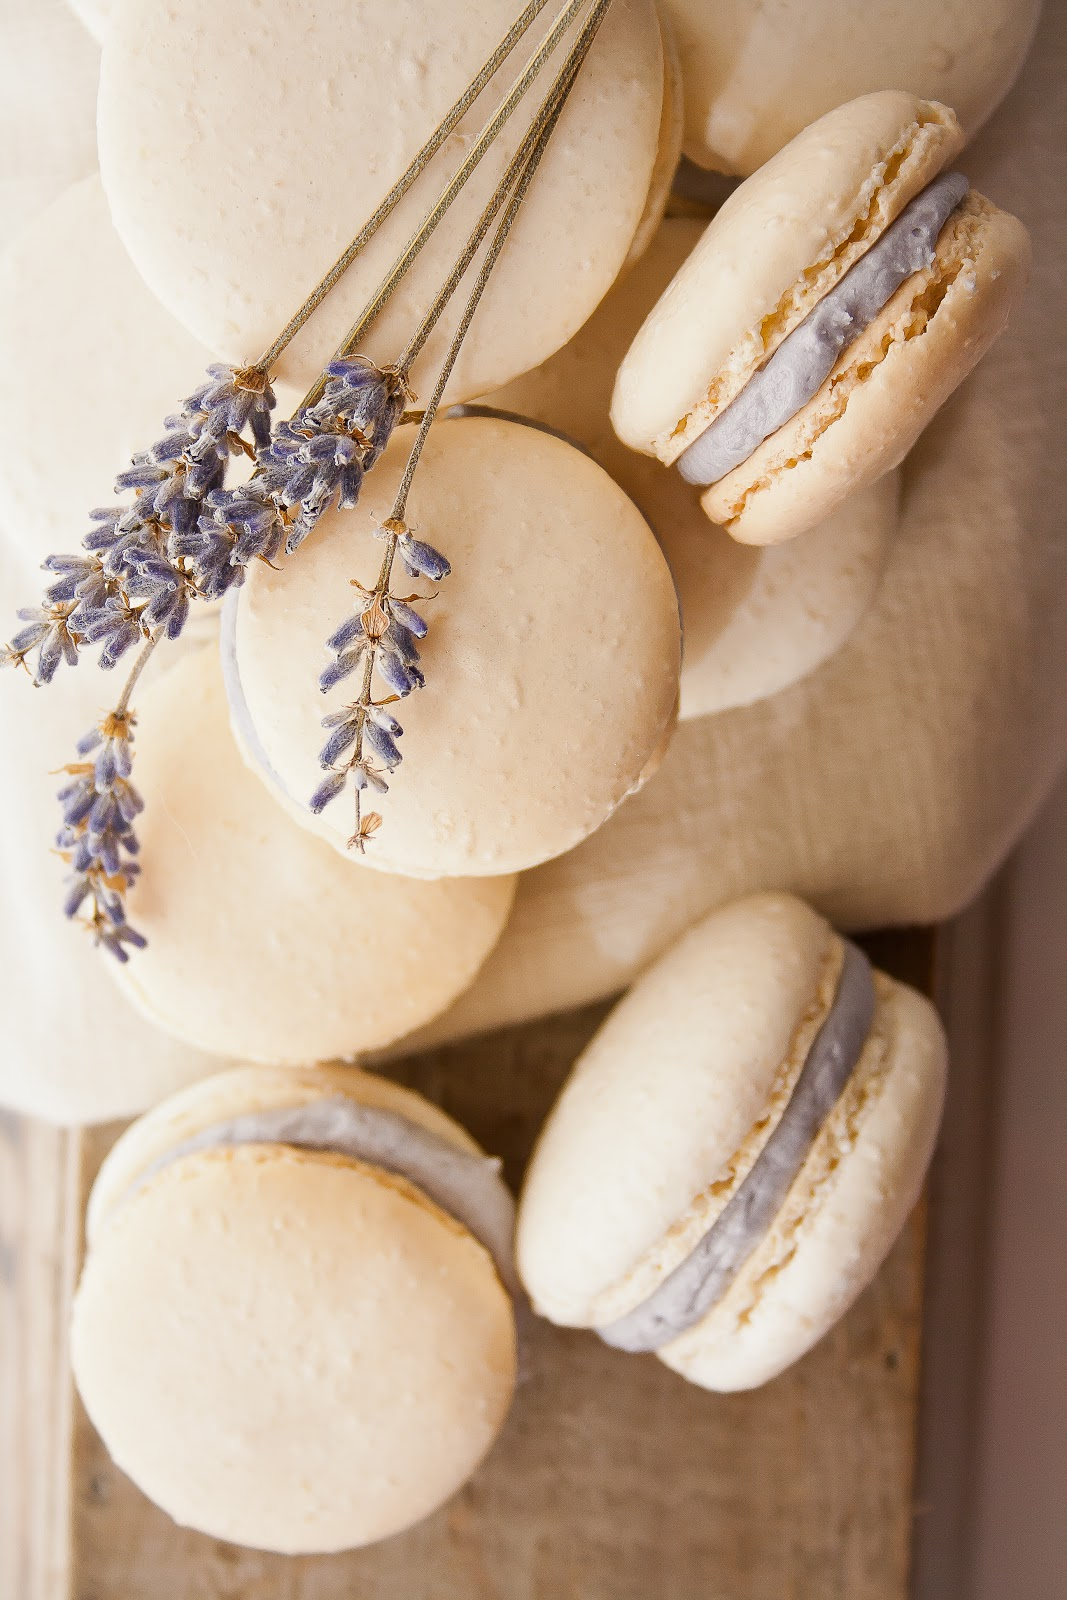 Honey lavender macarons. By